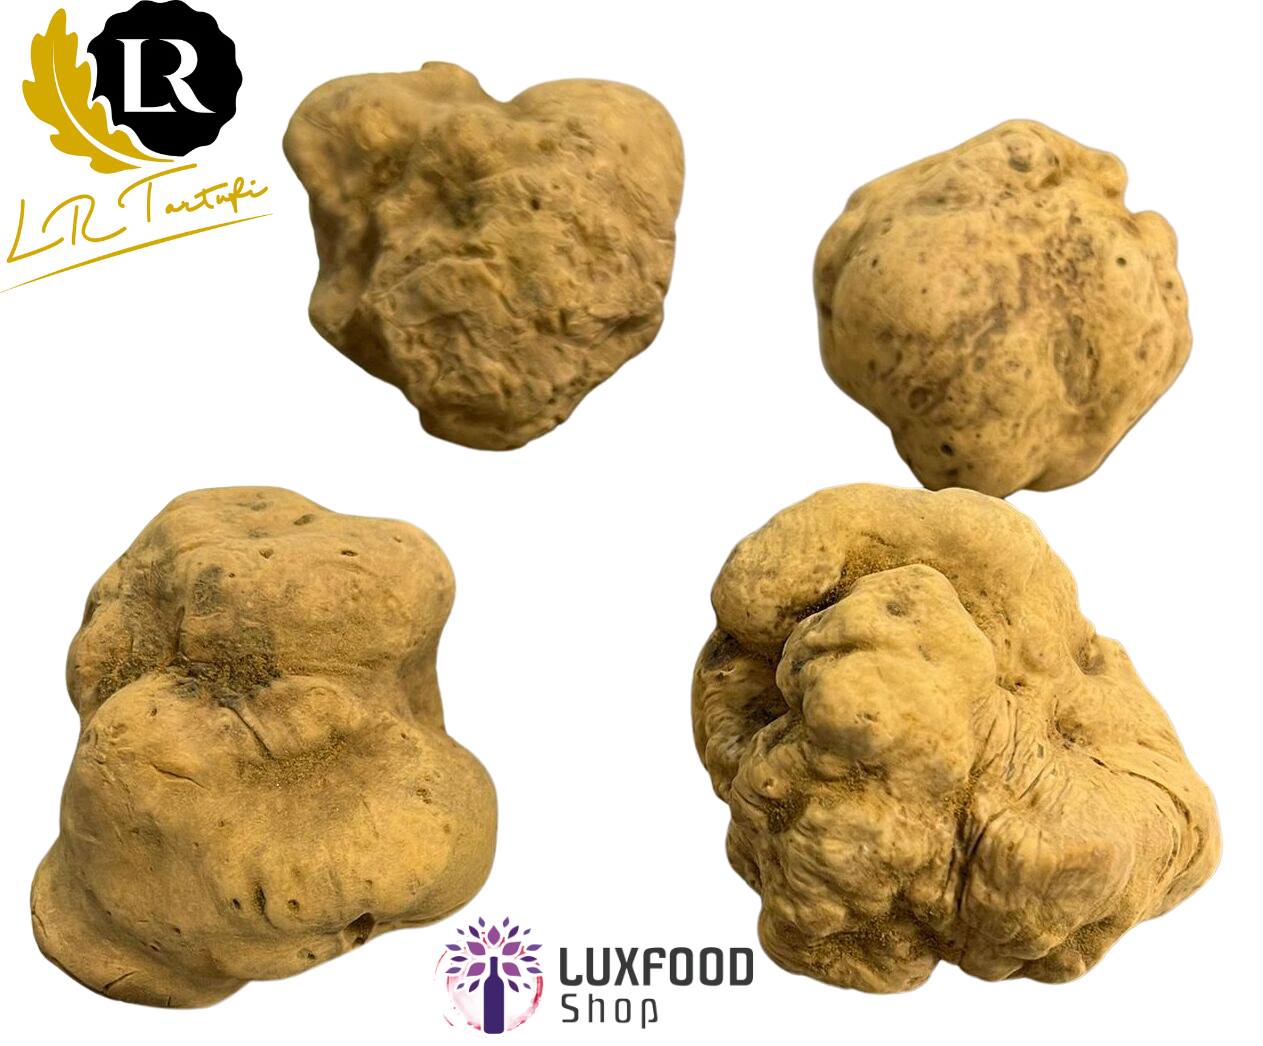 truffe blanche extra (Tuber magnatum Pico) LR Tartufi 2-2